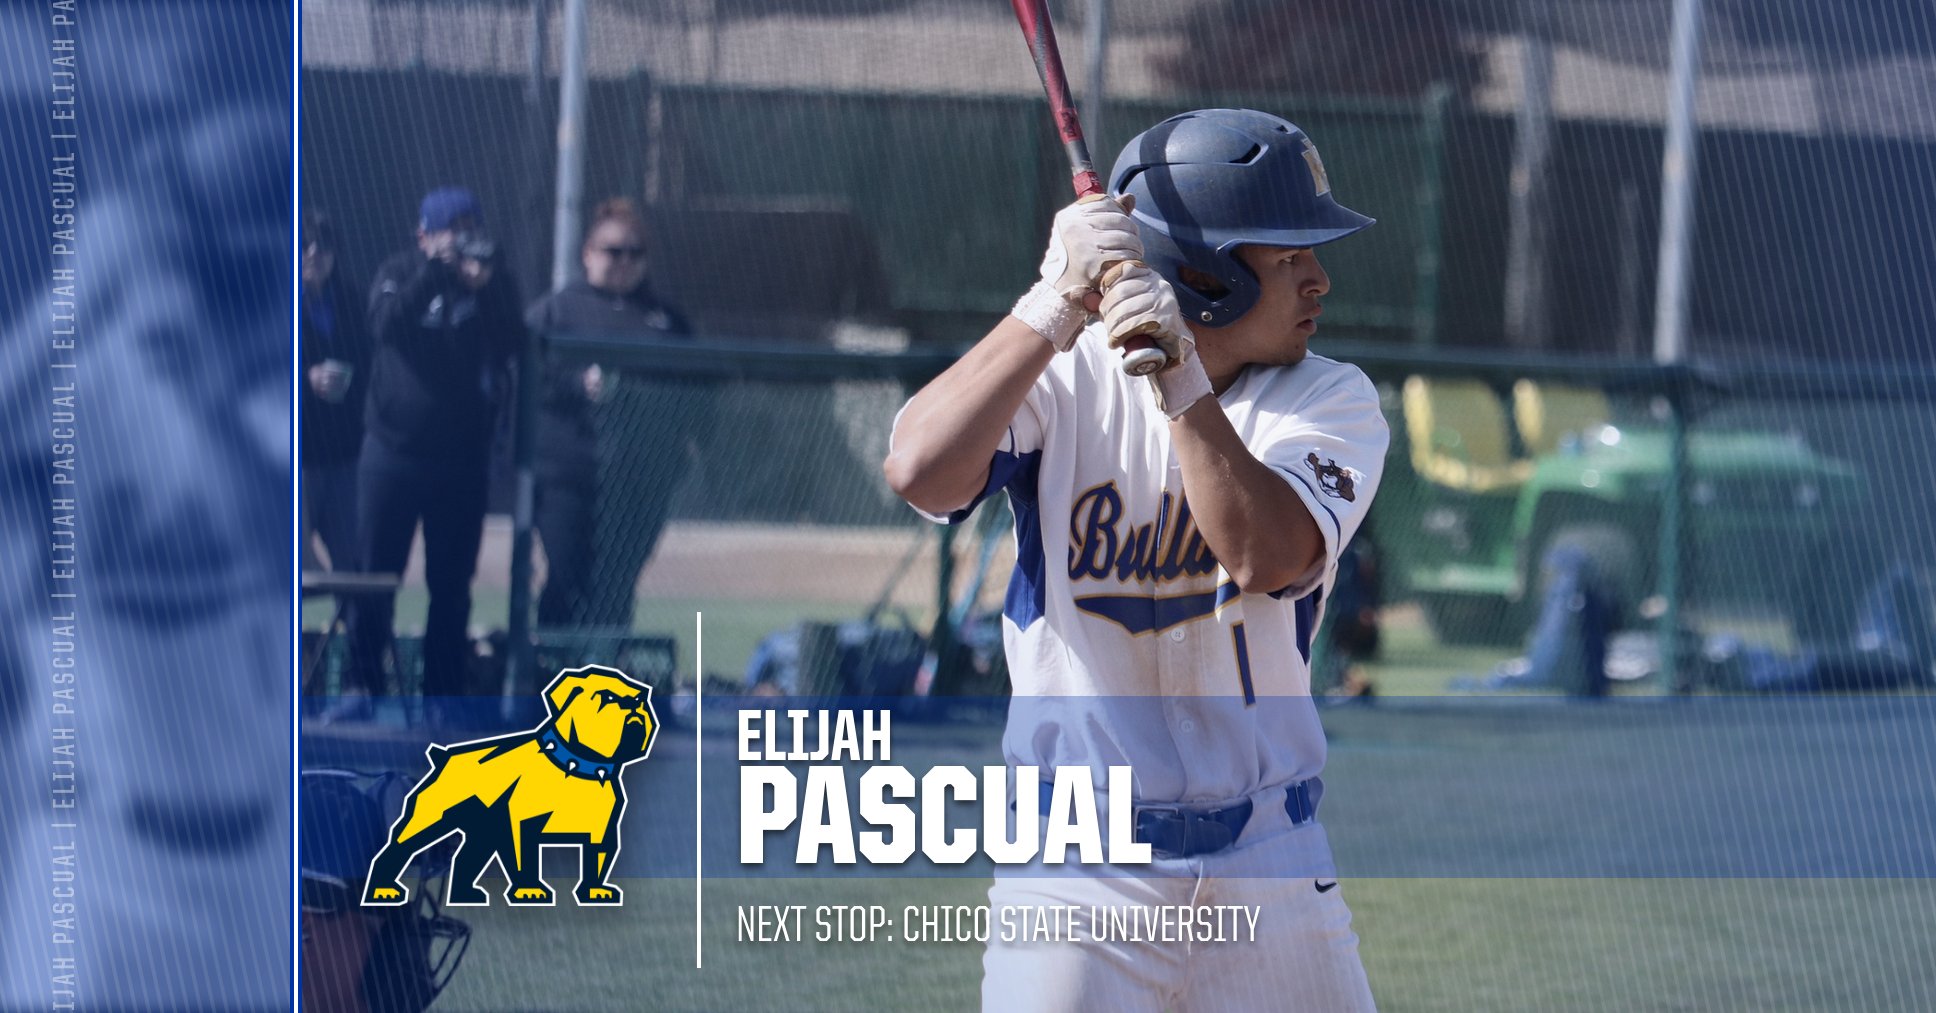 Baseball's Elijah Pascual Heading to Chico State